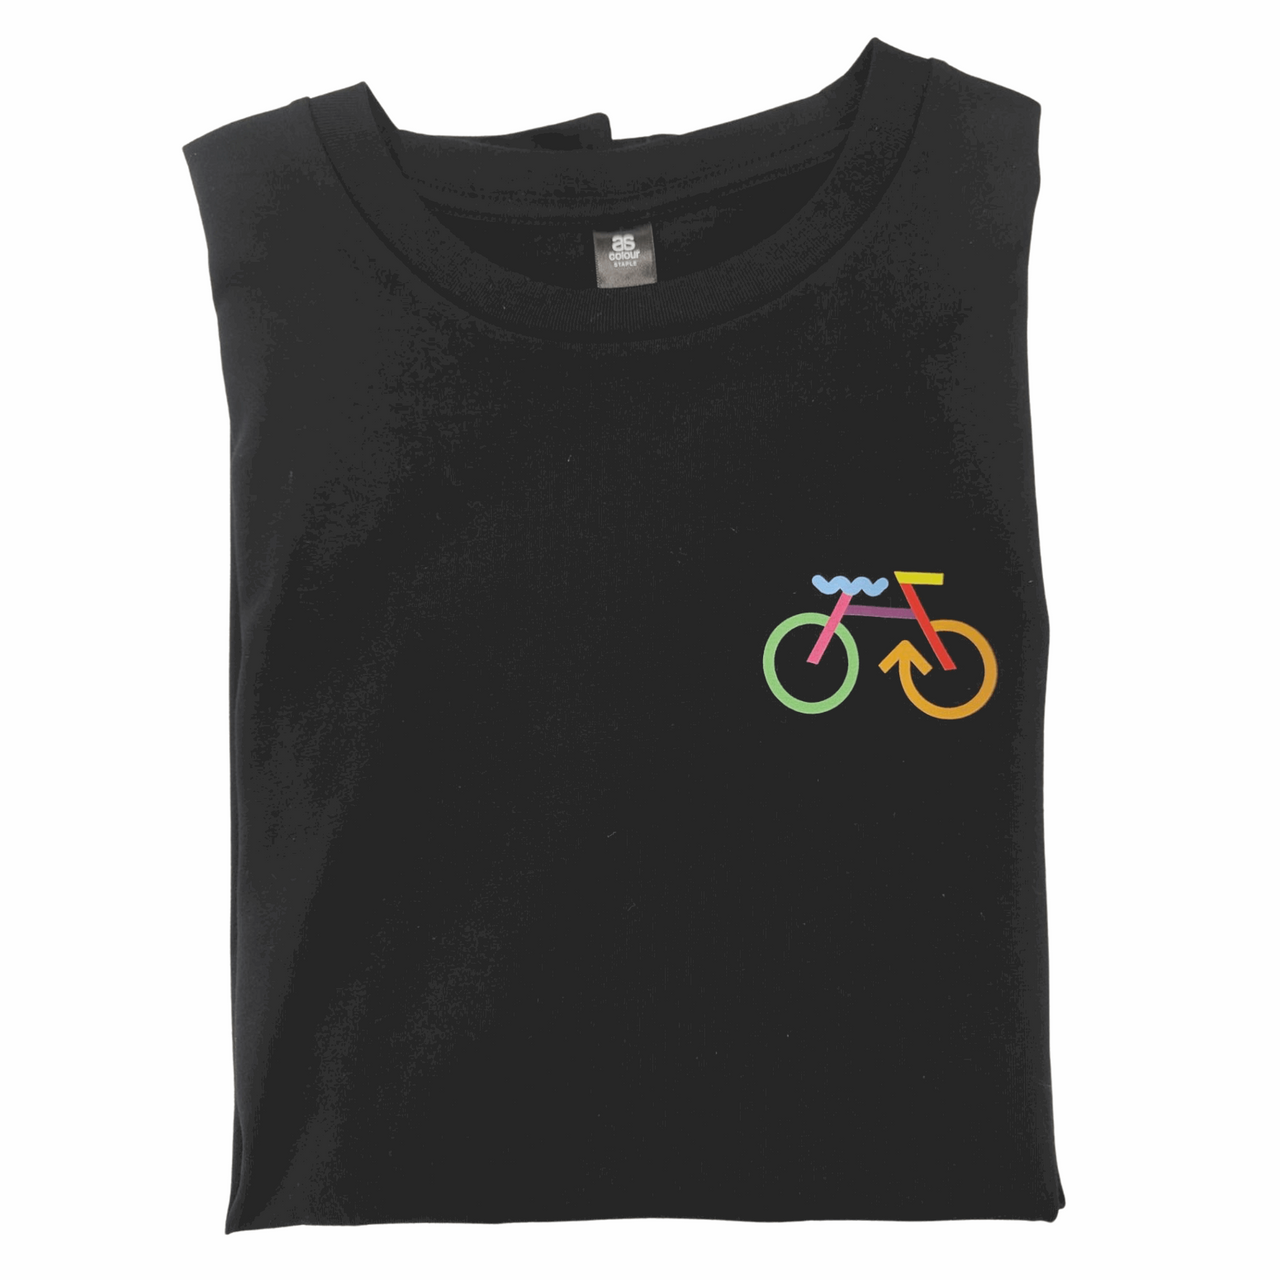 Brainwave Bikes Unisex T-Shirt